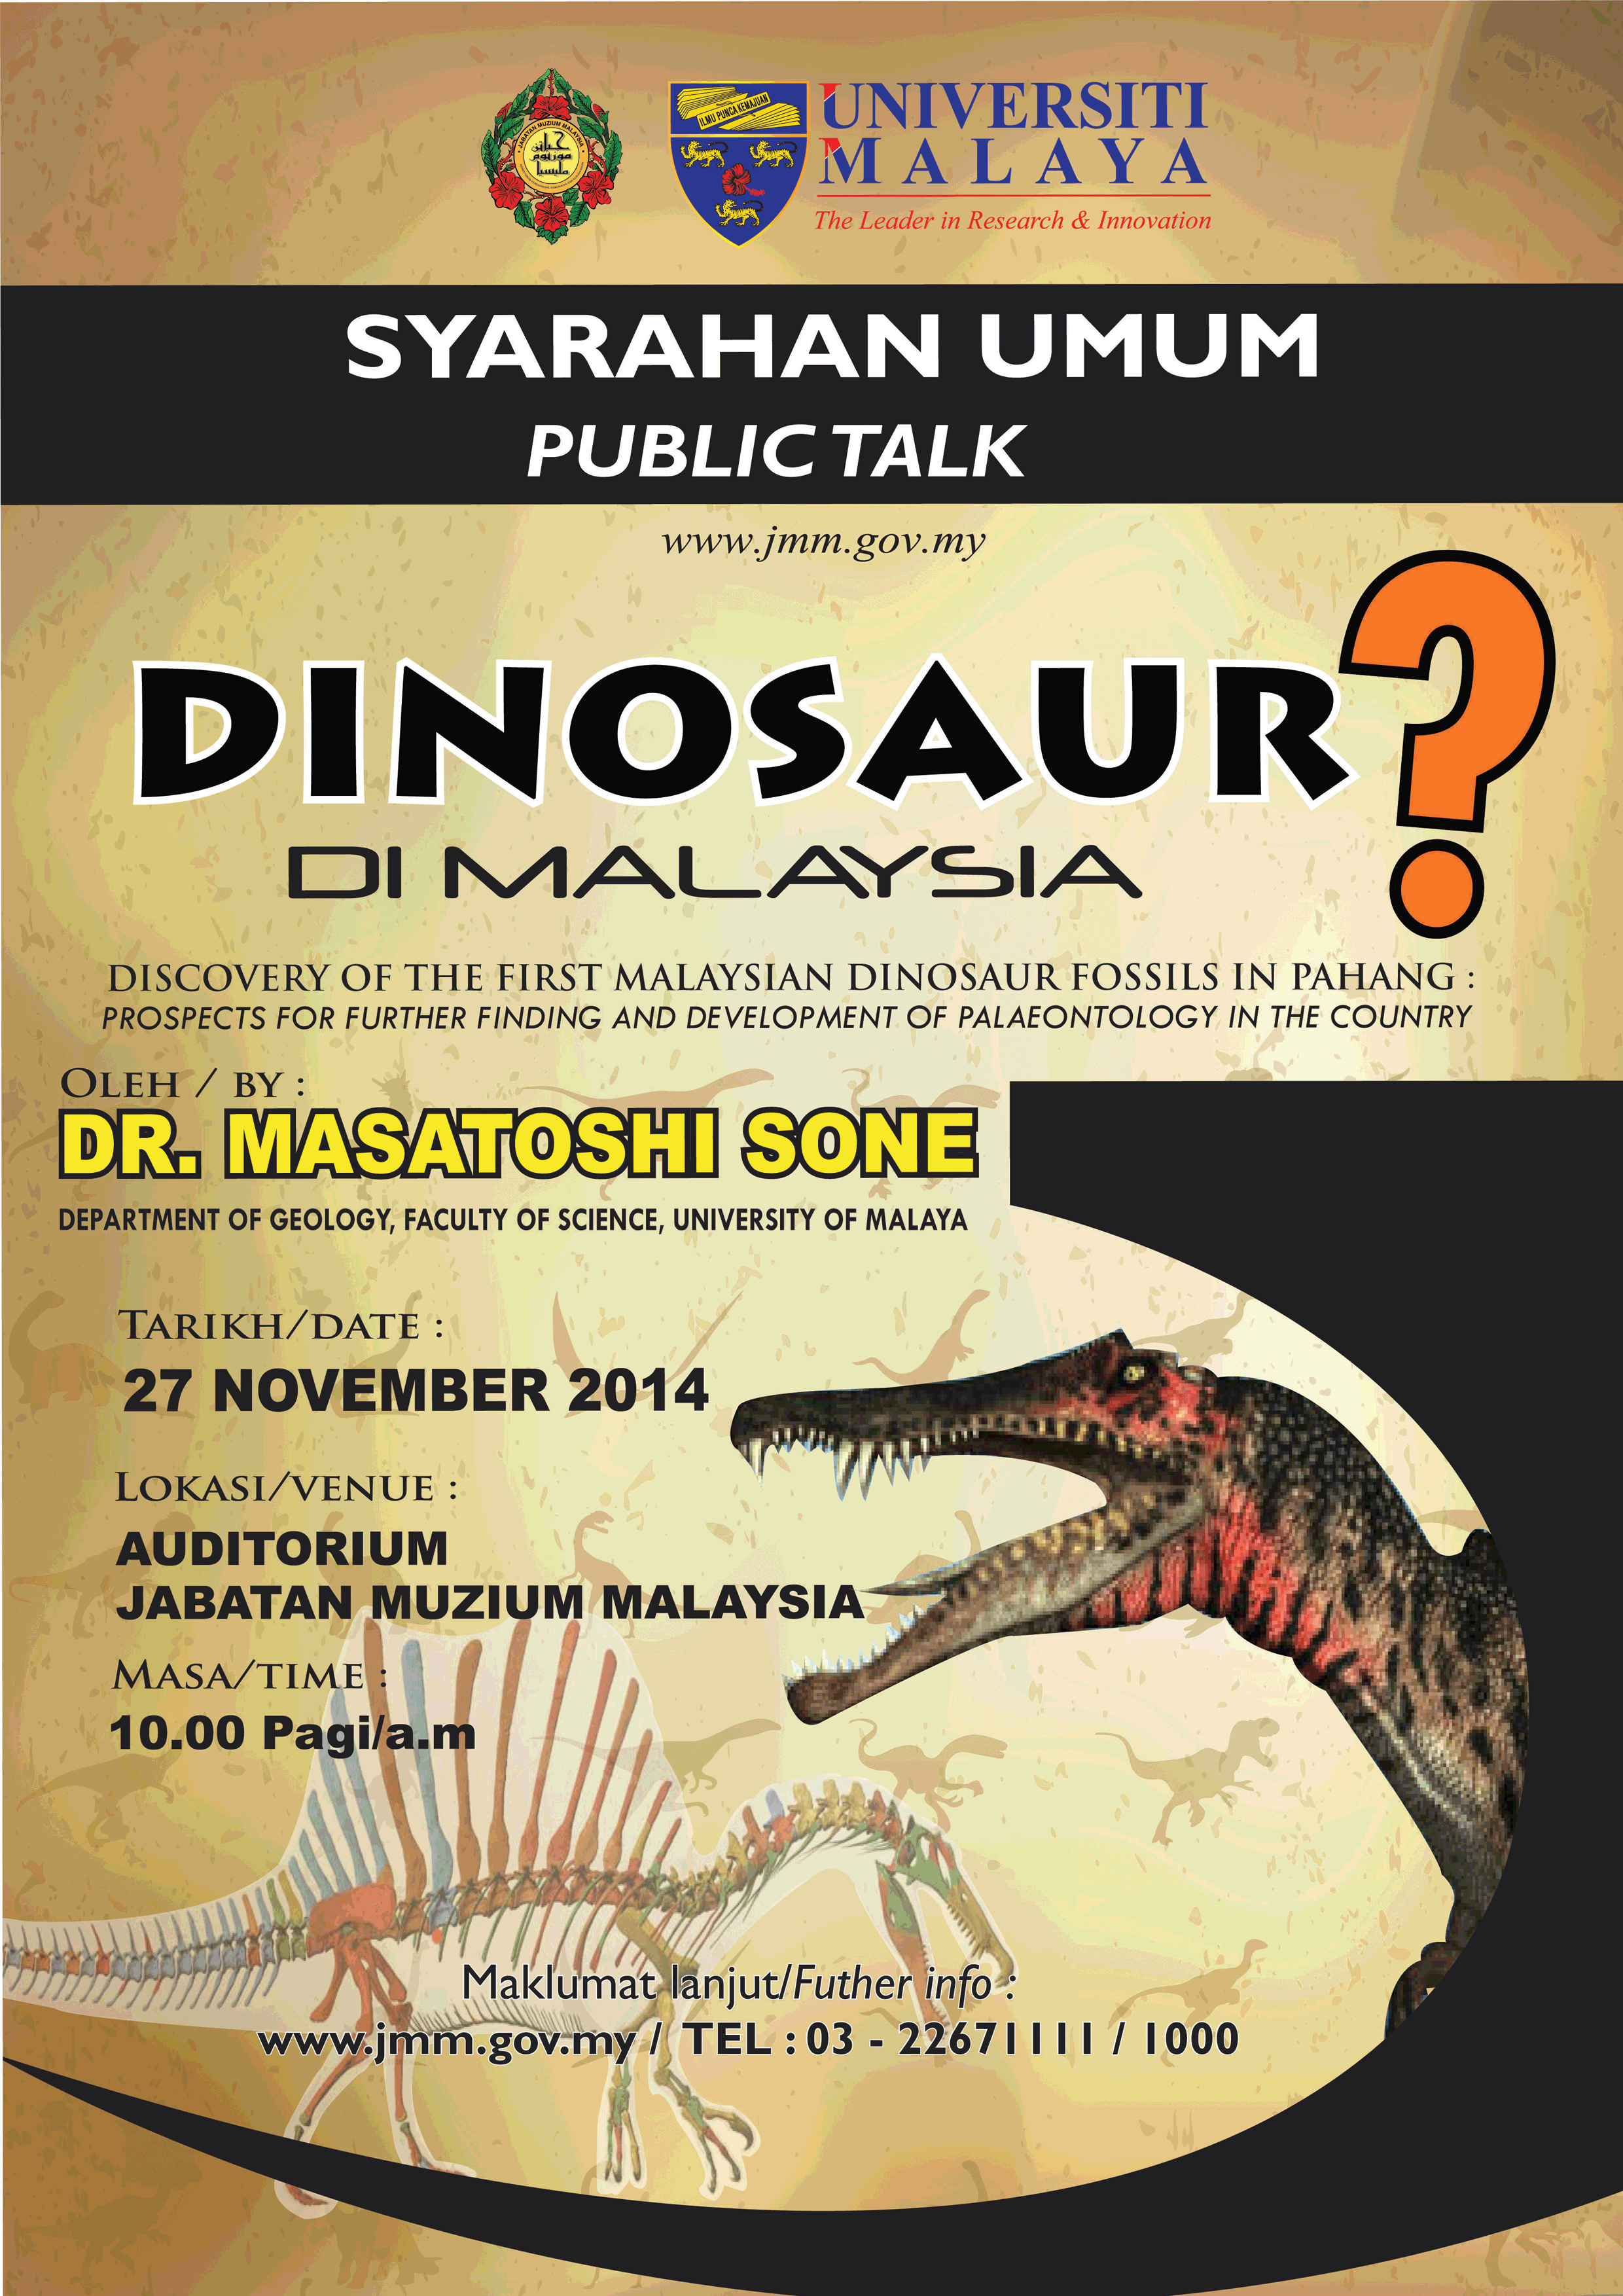  Dinosaur Di Malaysia?